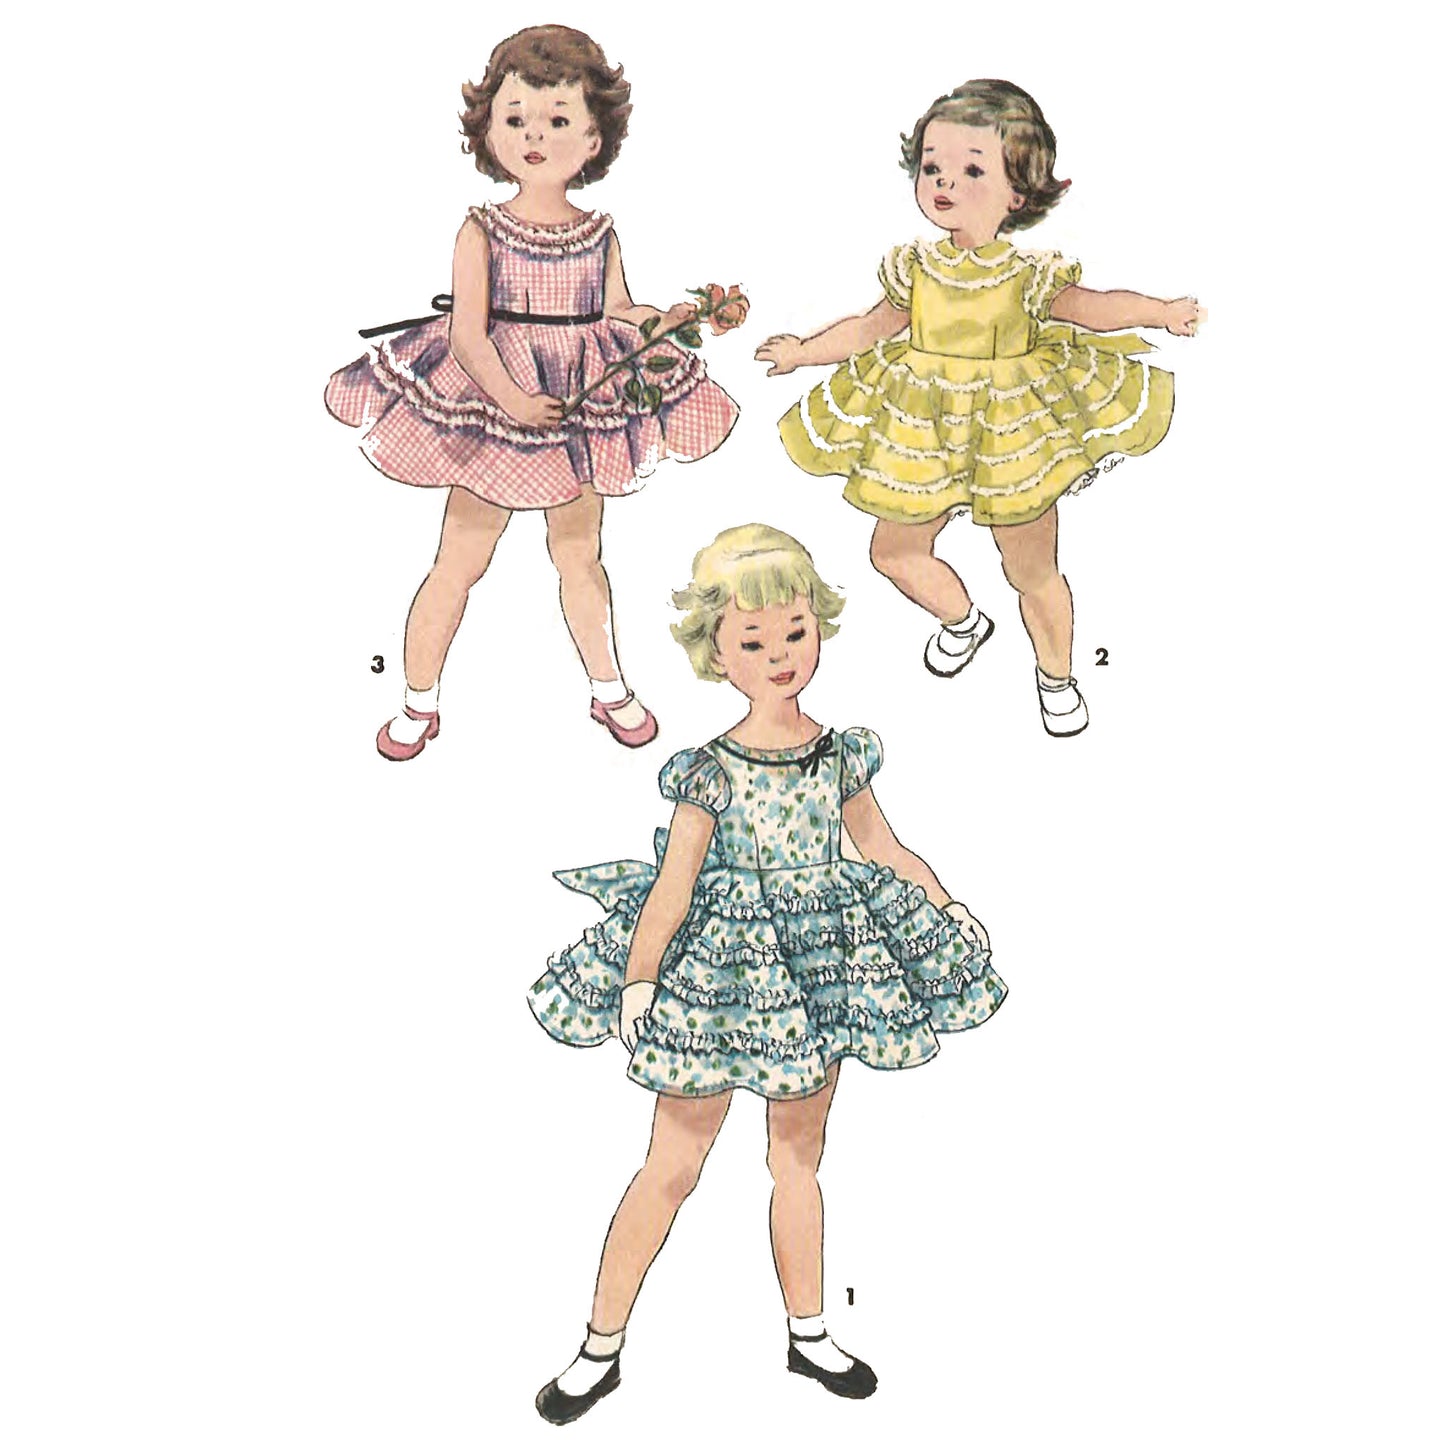 3 little girls in frilly dresses